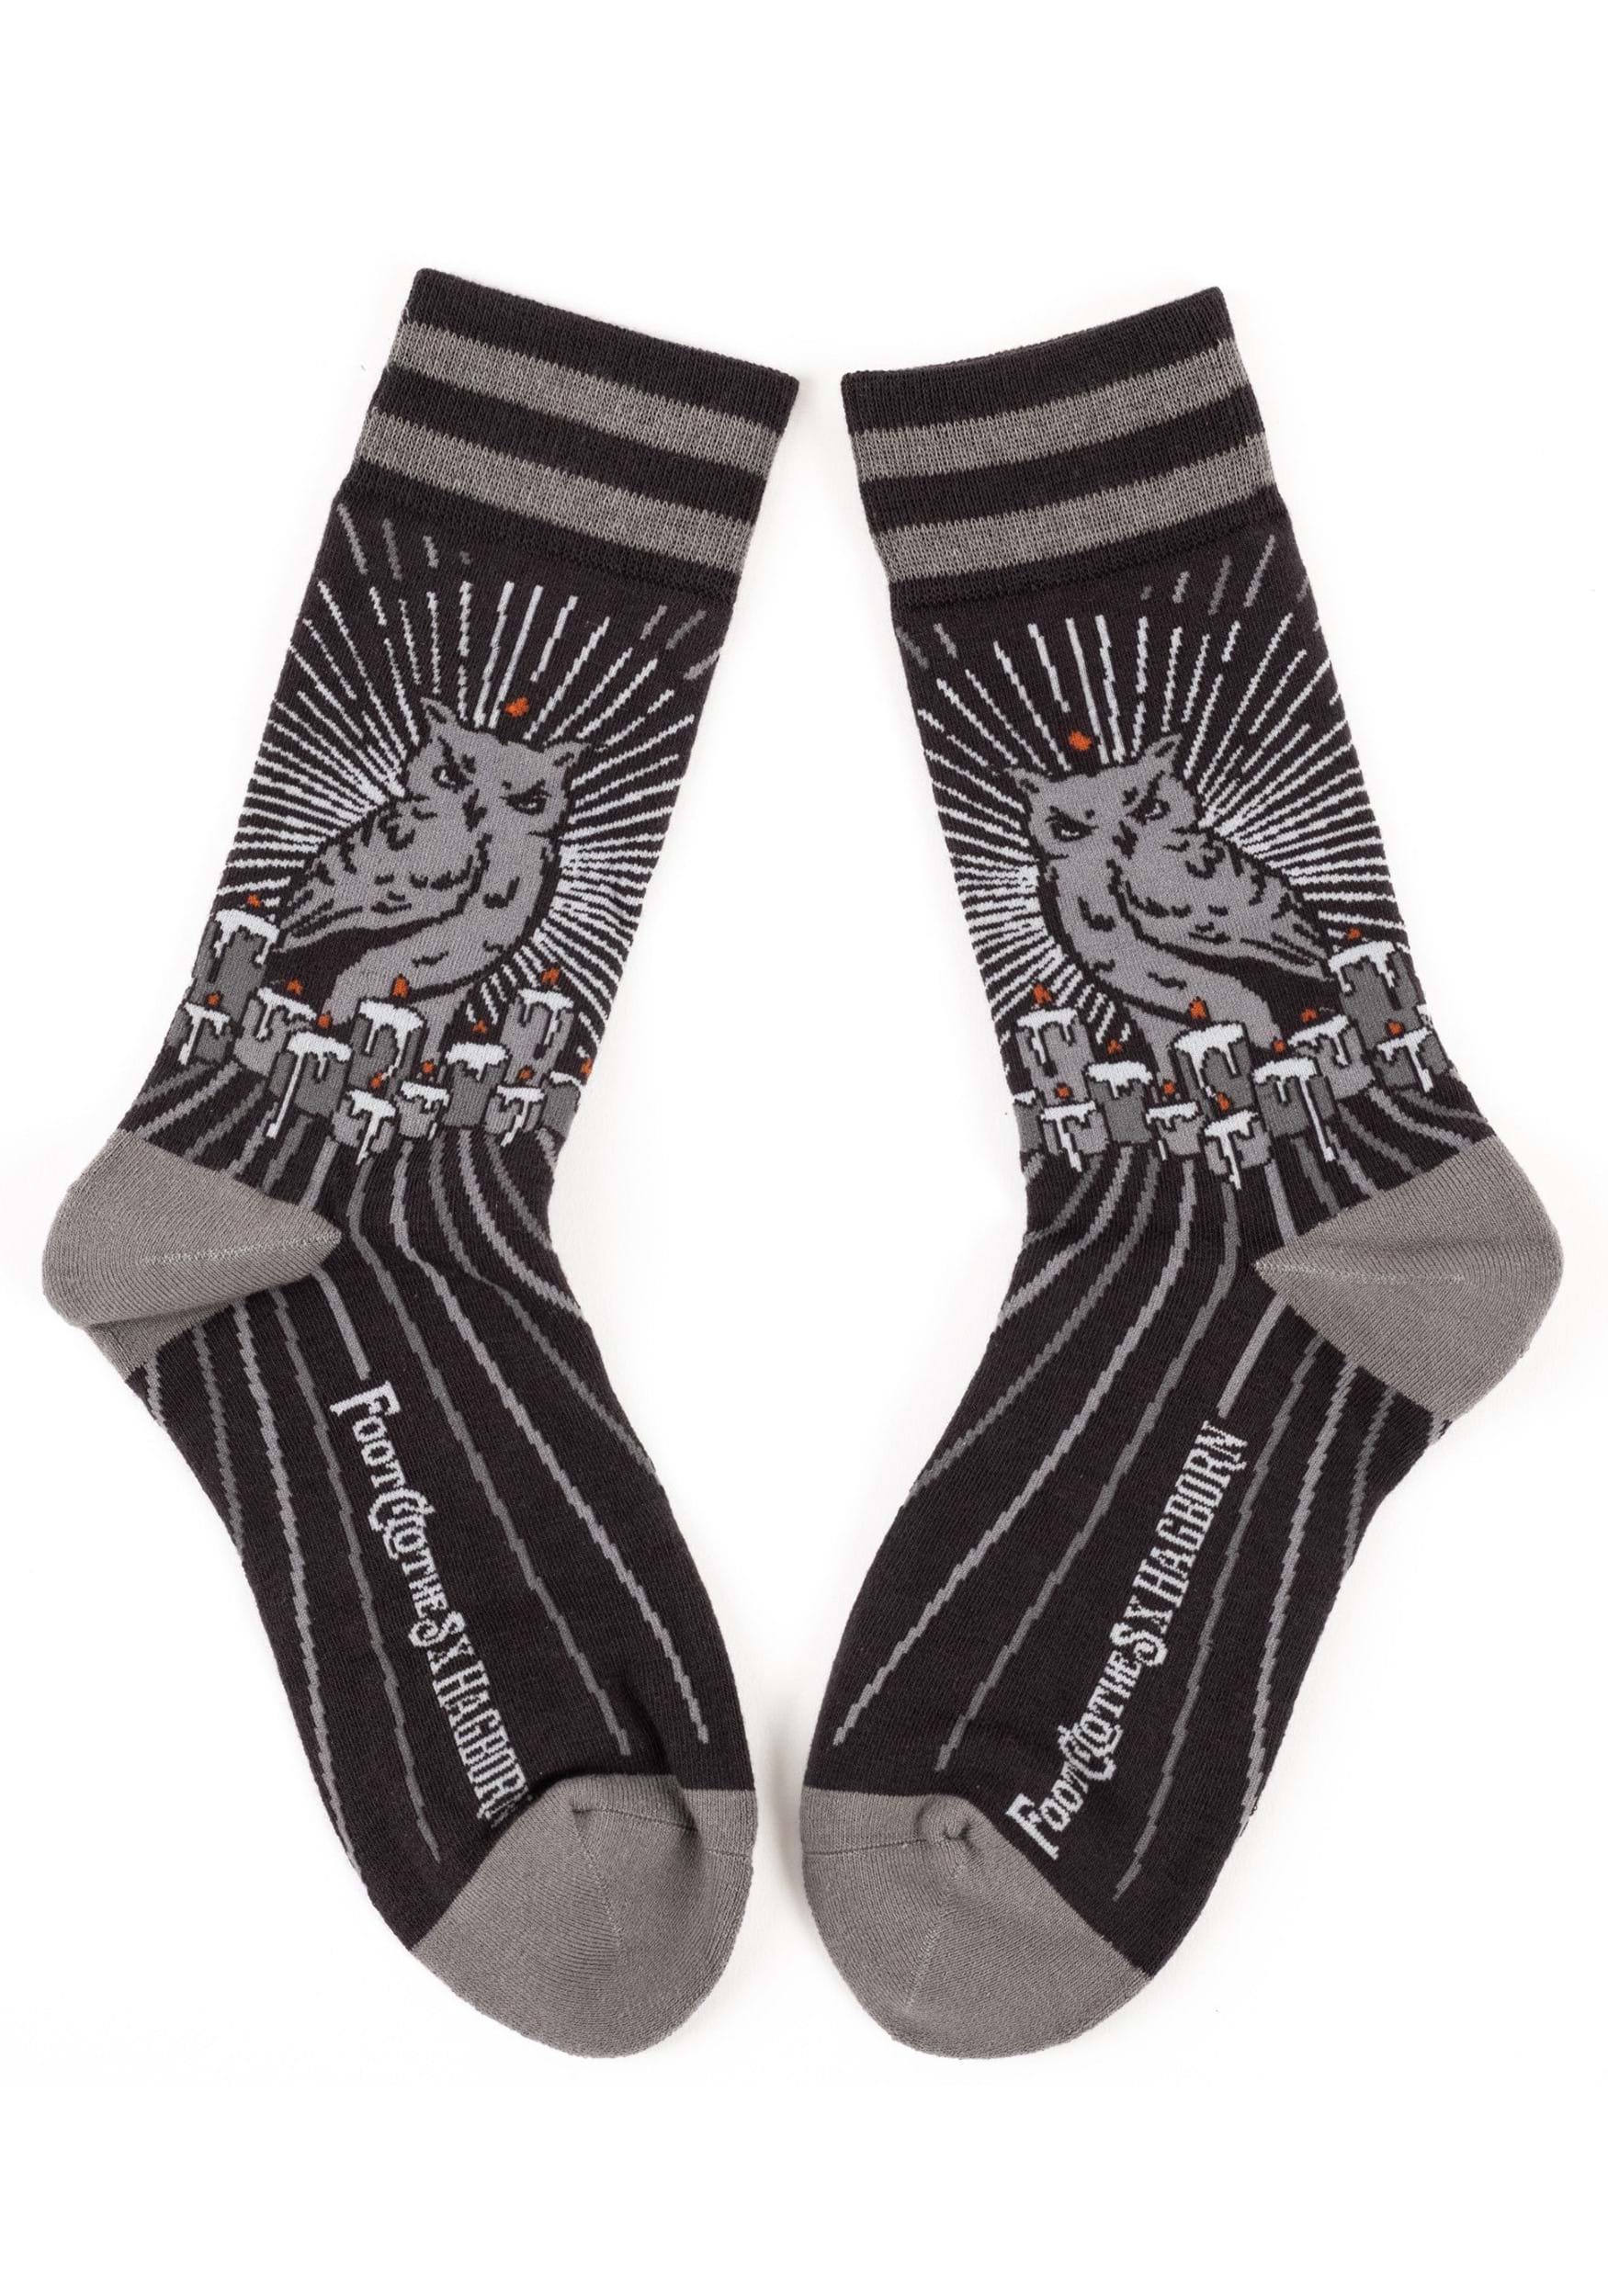 Night Owl FootClothes X Hagborn Collab Socks